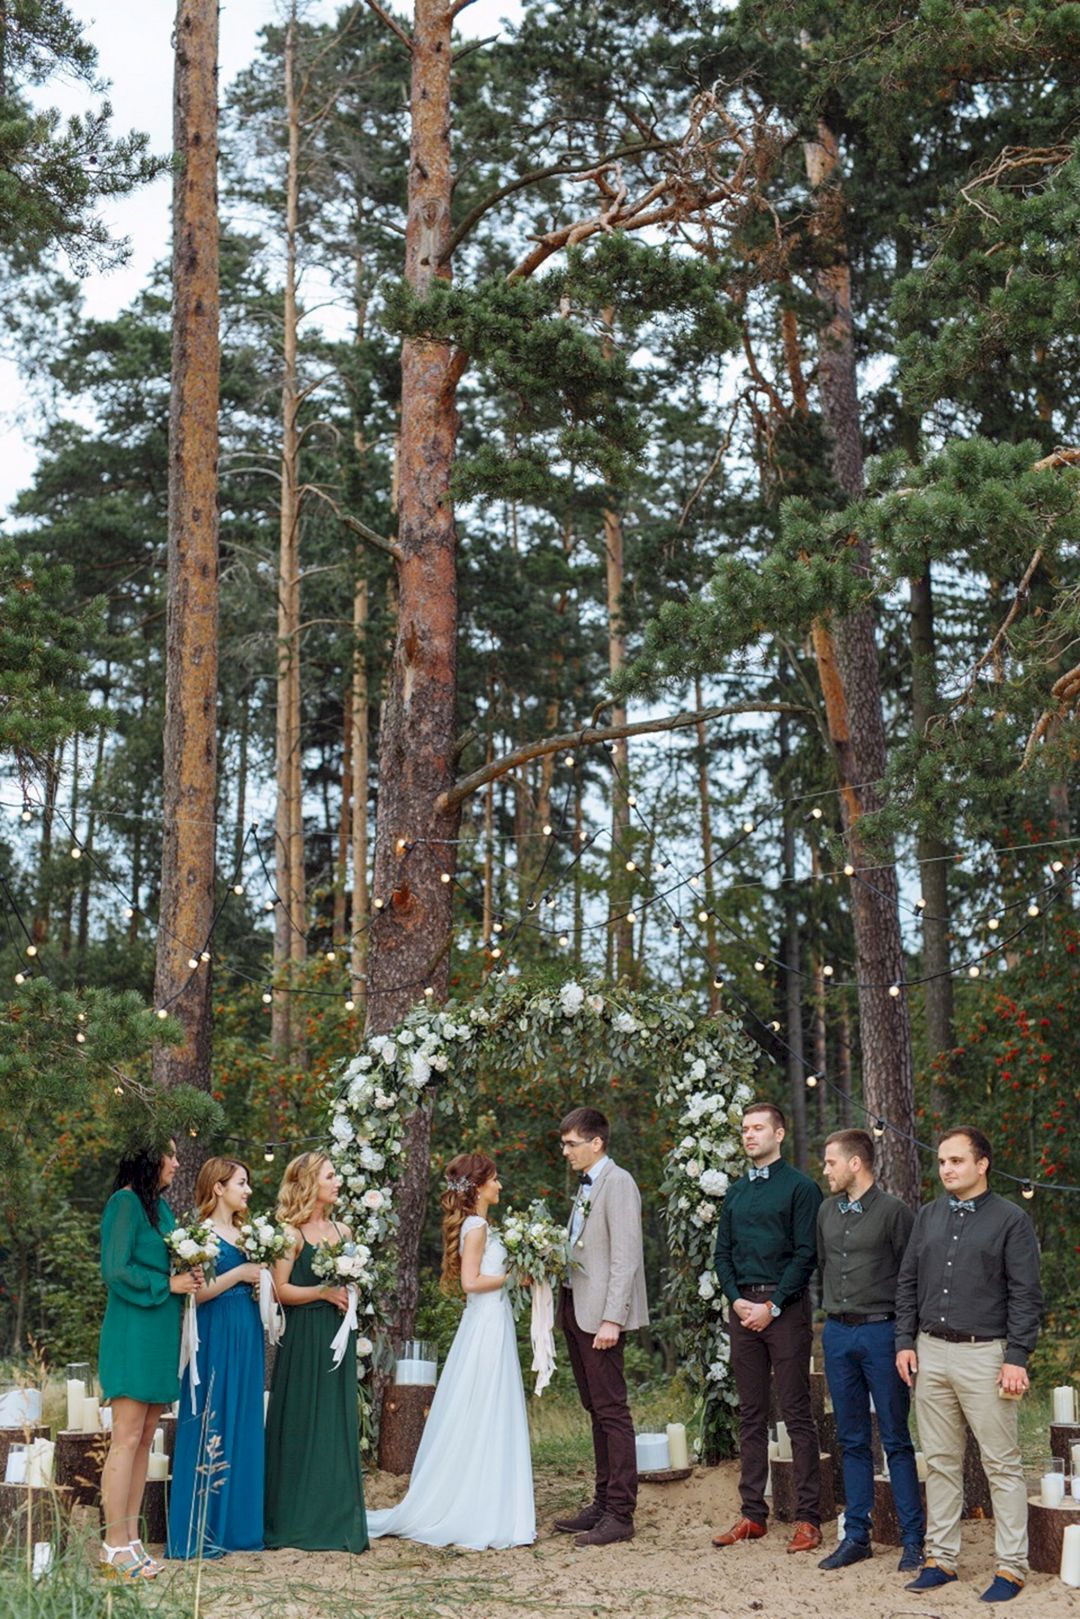 Wedding photoshoot in nature from weddywood.ru